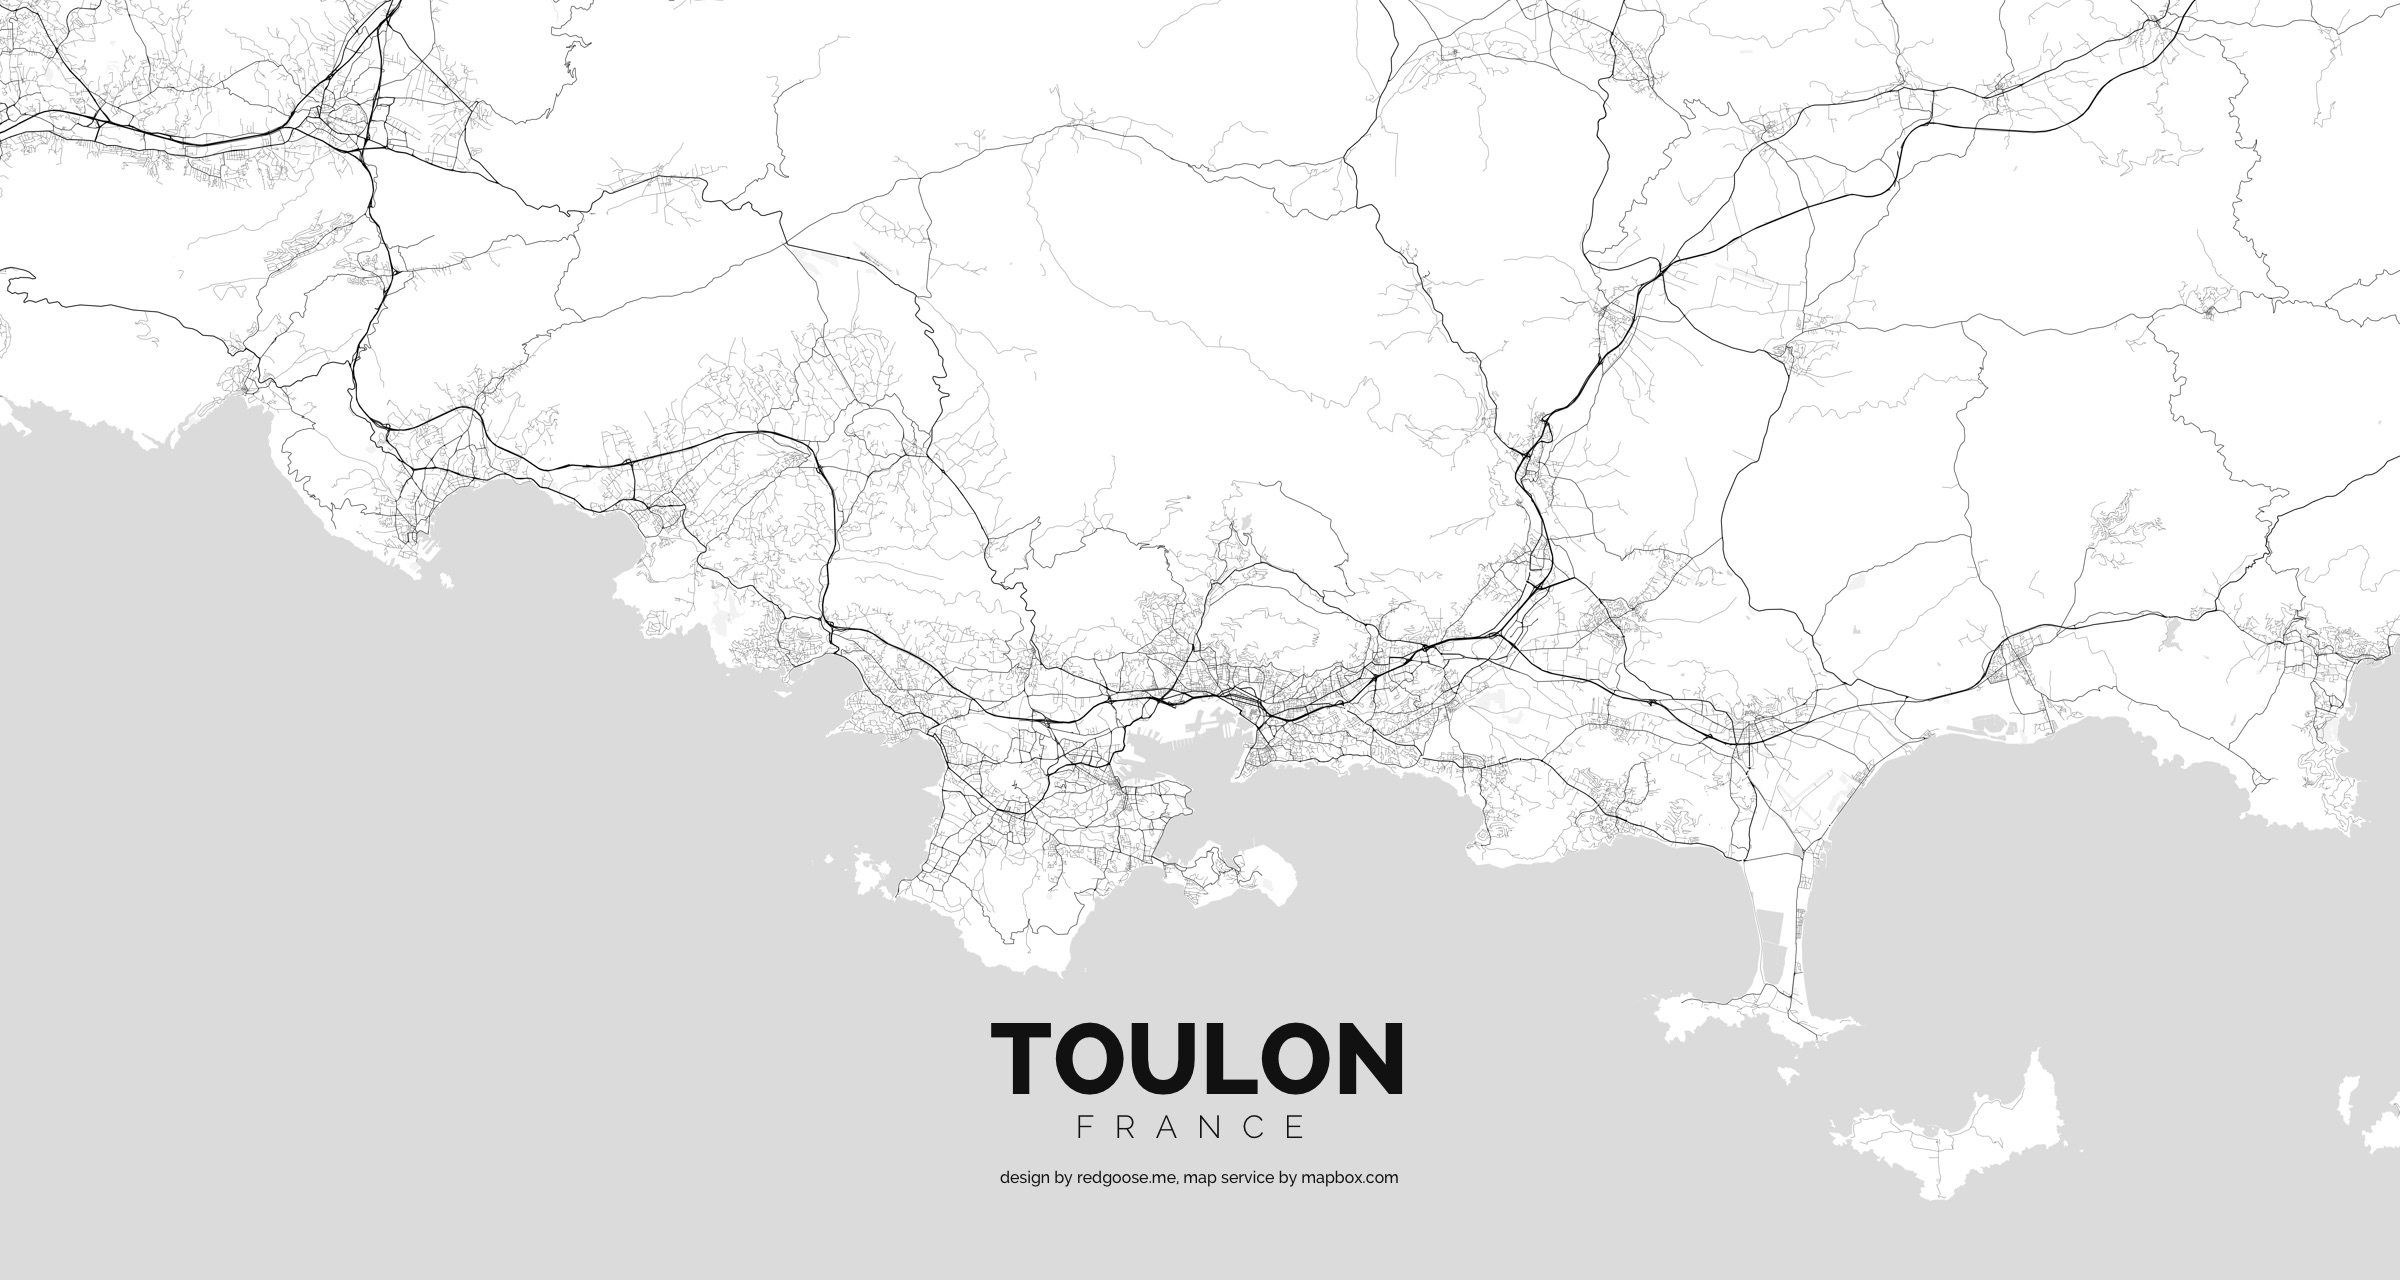 France_-_Toulon.jpg